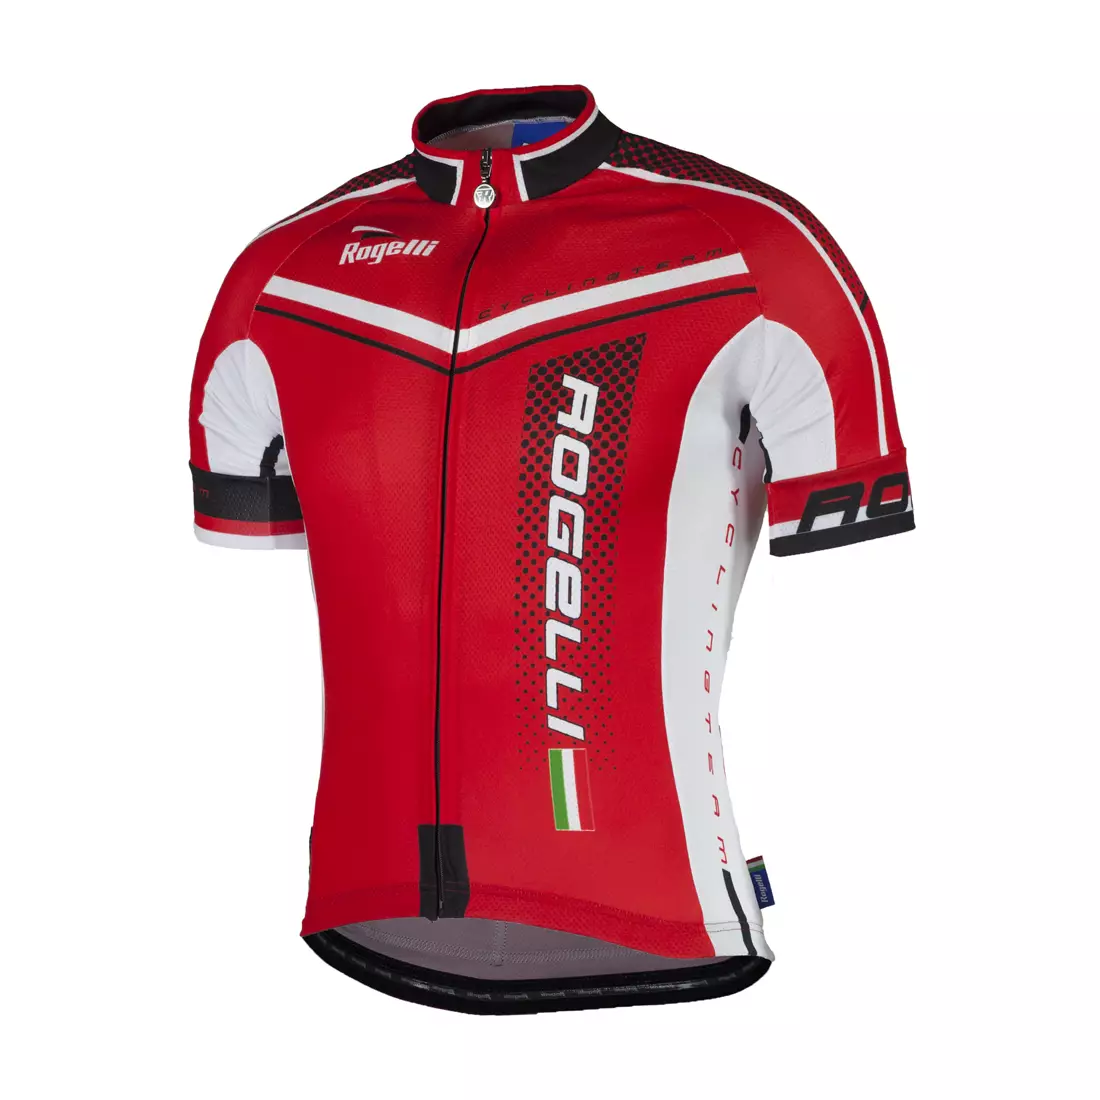 ROGELLI GARA MOSTRO - men's cycling jersey 001.243, red